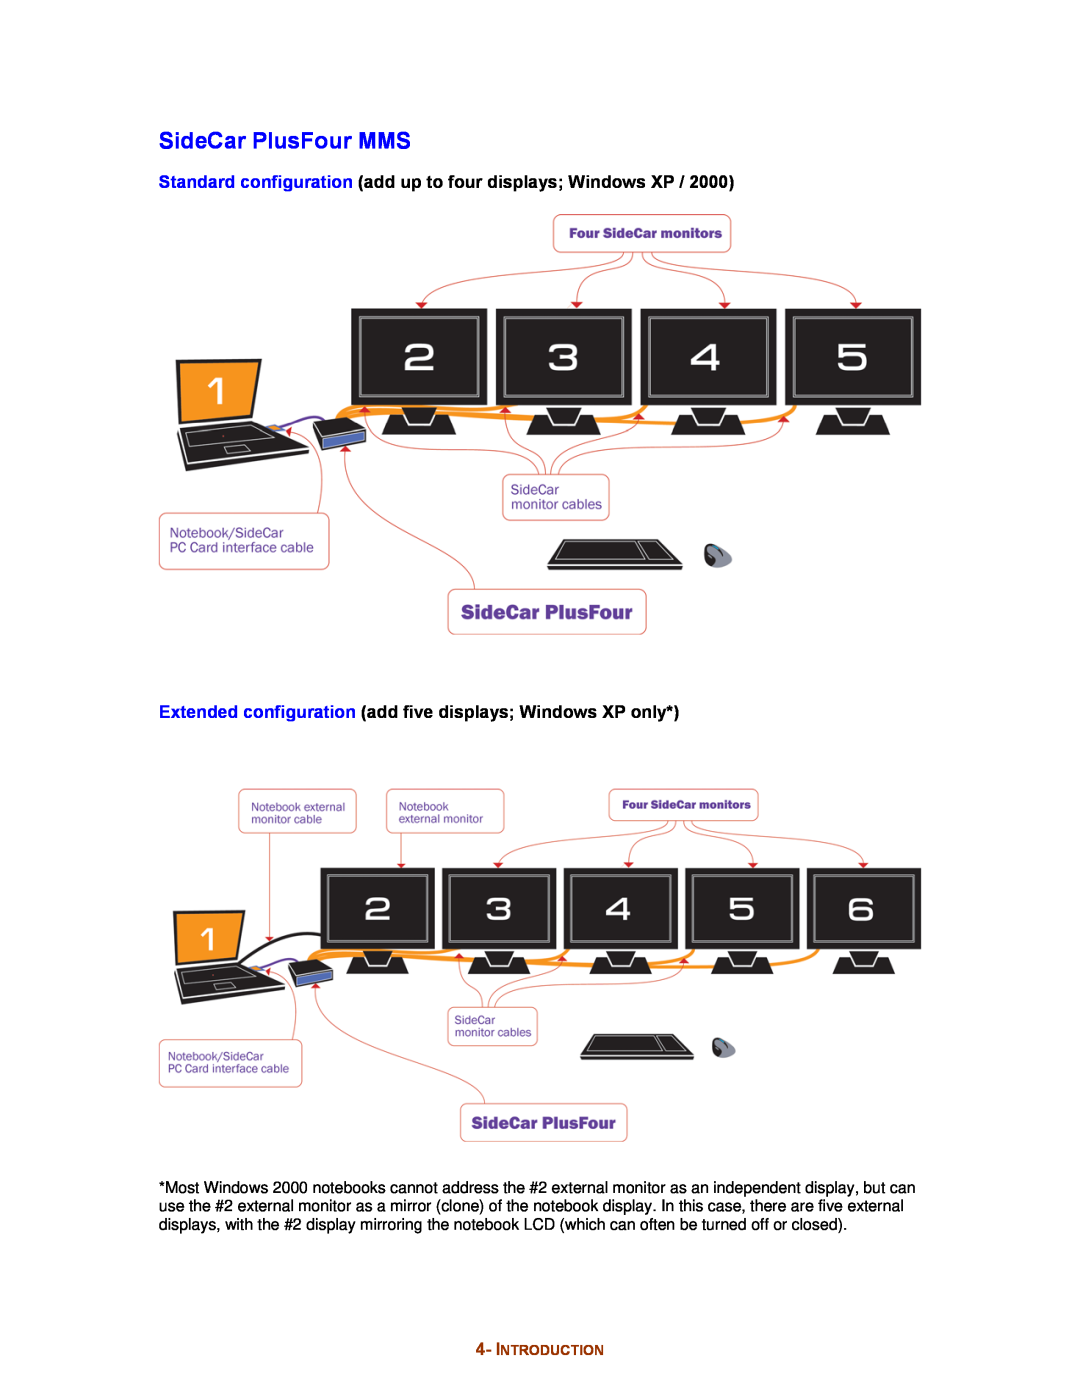 Digital Tigers SideCar MMS Series manual SideCar PlusFour MMS, Standard configuration add up to four displays Windows XP 